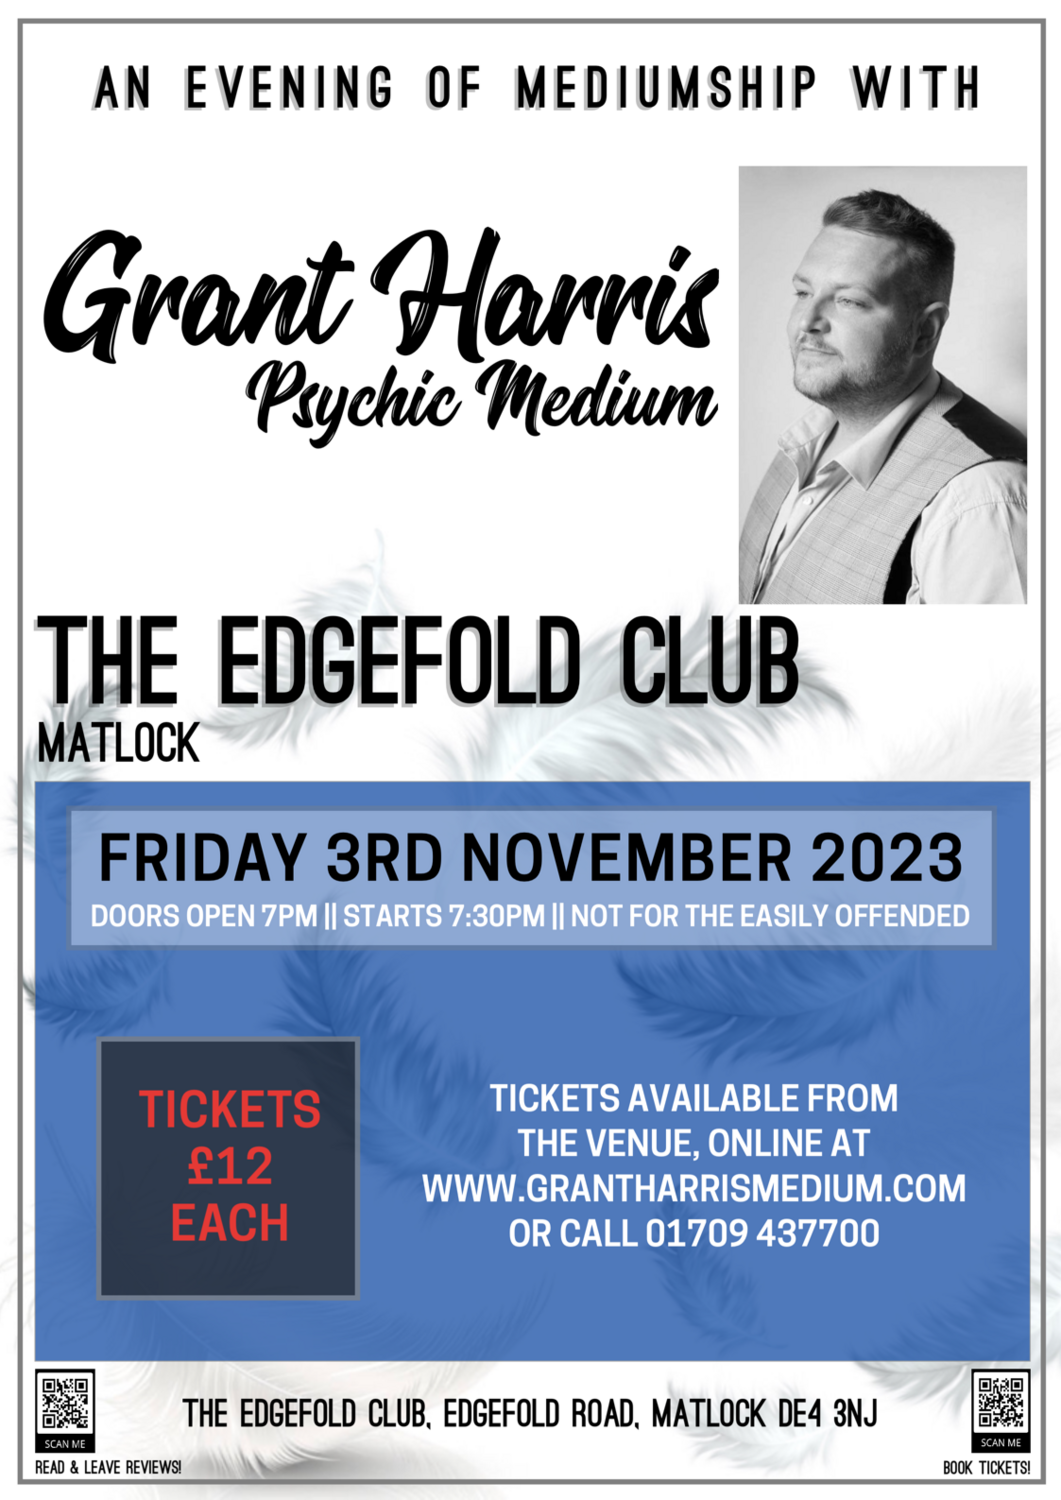 The Edgefold Club, Matlock, Friday 3rd November 2023